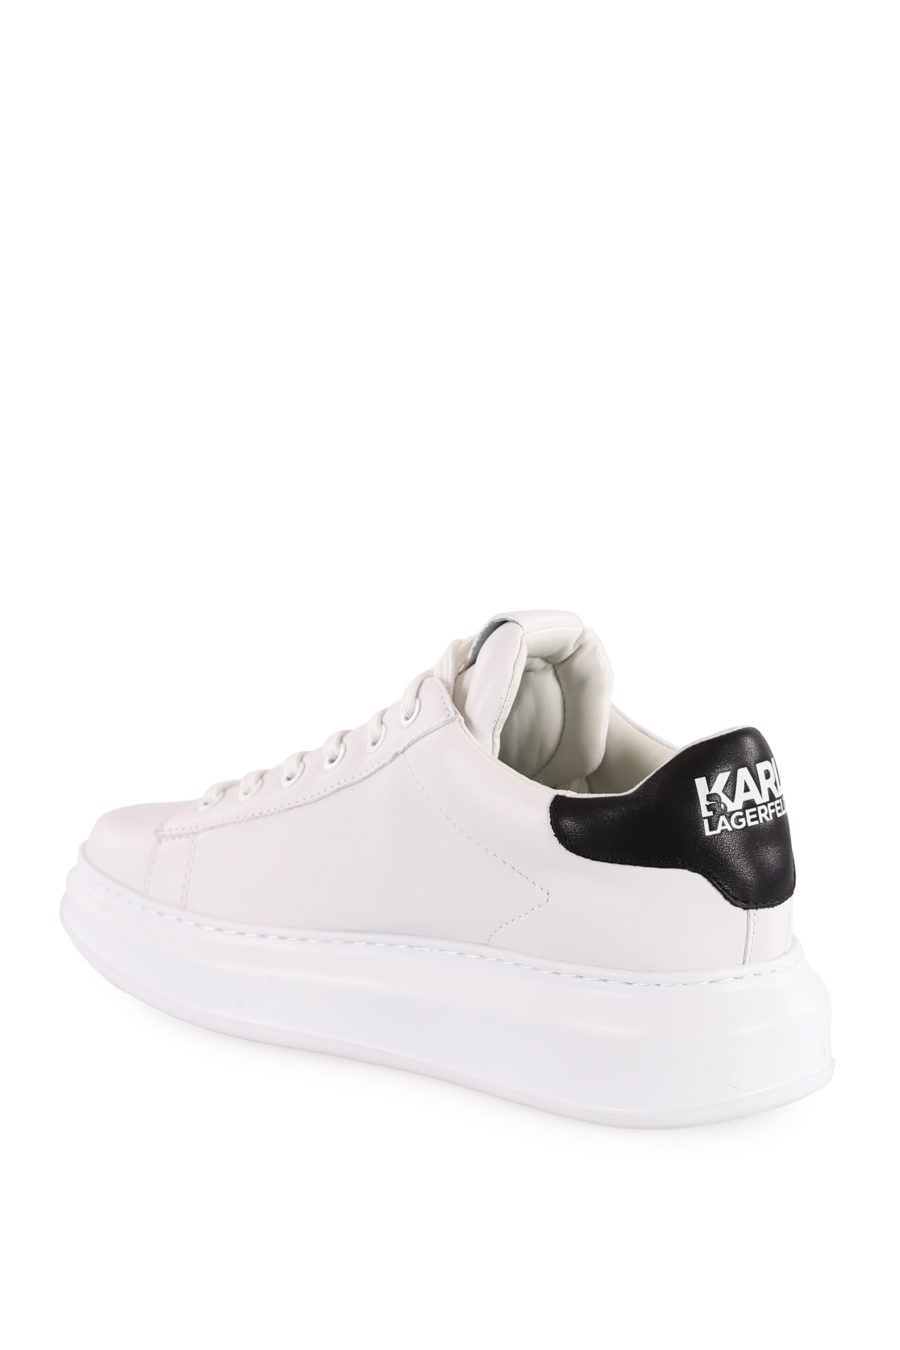 Zapatillas blancas con logotipo 3D "Karl" - 00b4c0e0c032b2ca97e765a3b402df4d5e90eb23